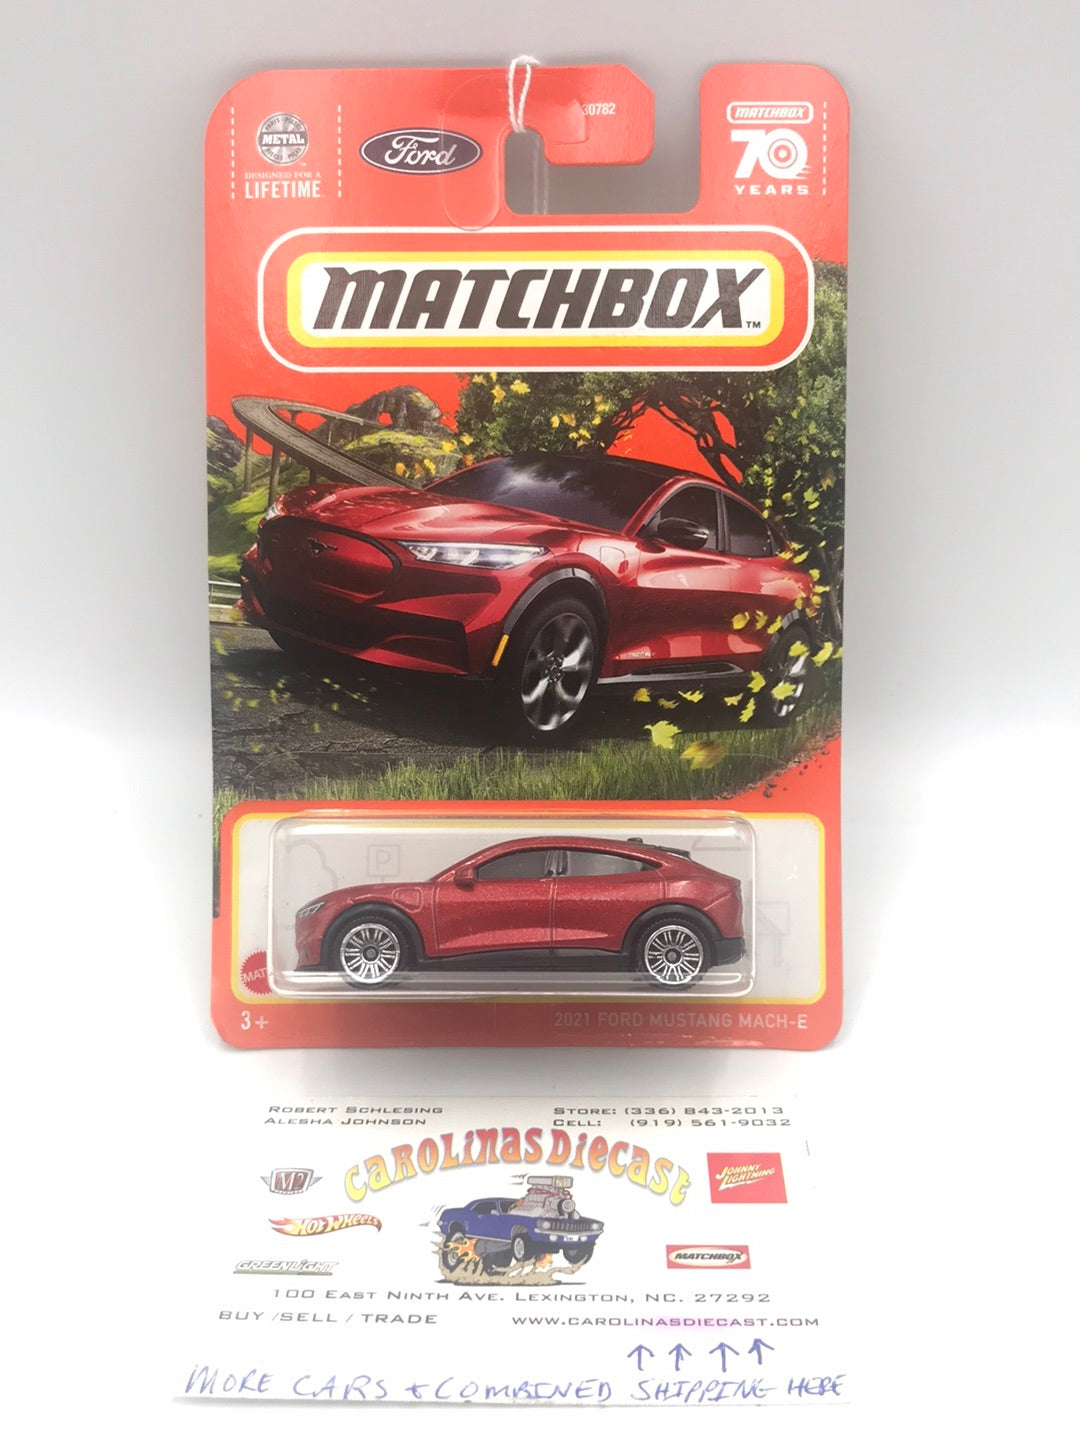 2023 matchbox 70 years 2021 Ford Mustang Mach-E 19E